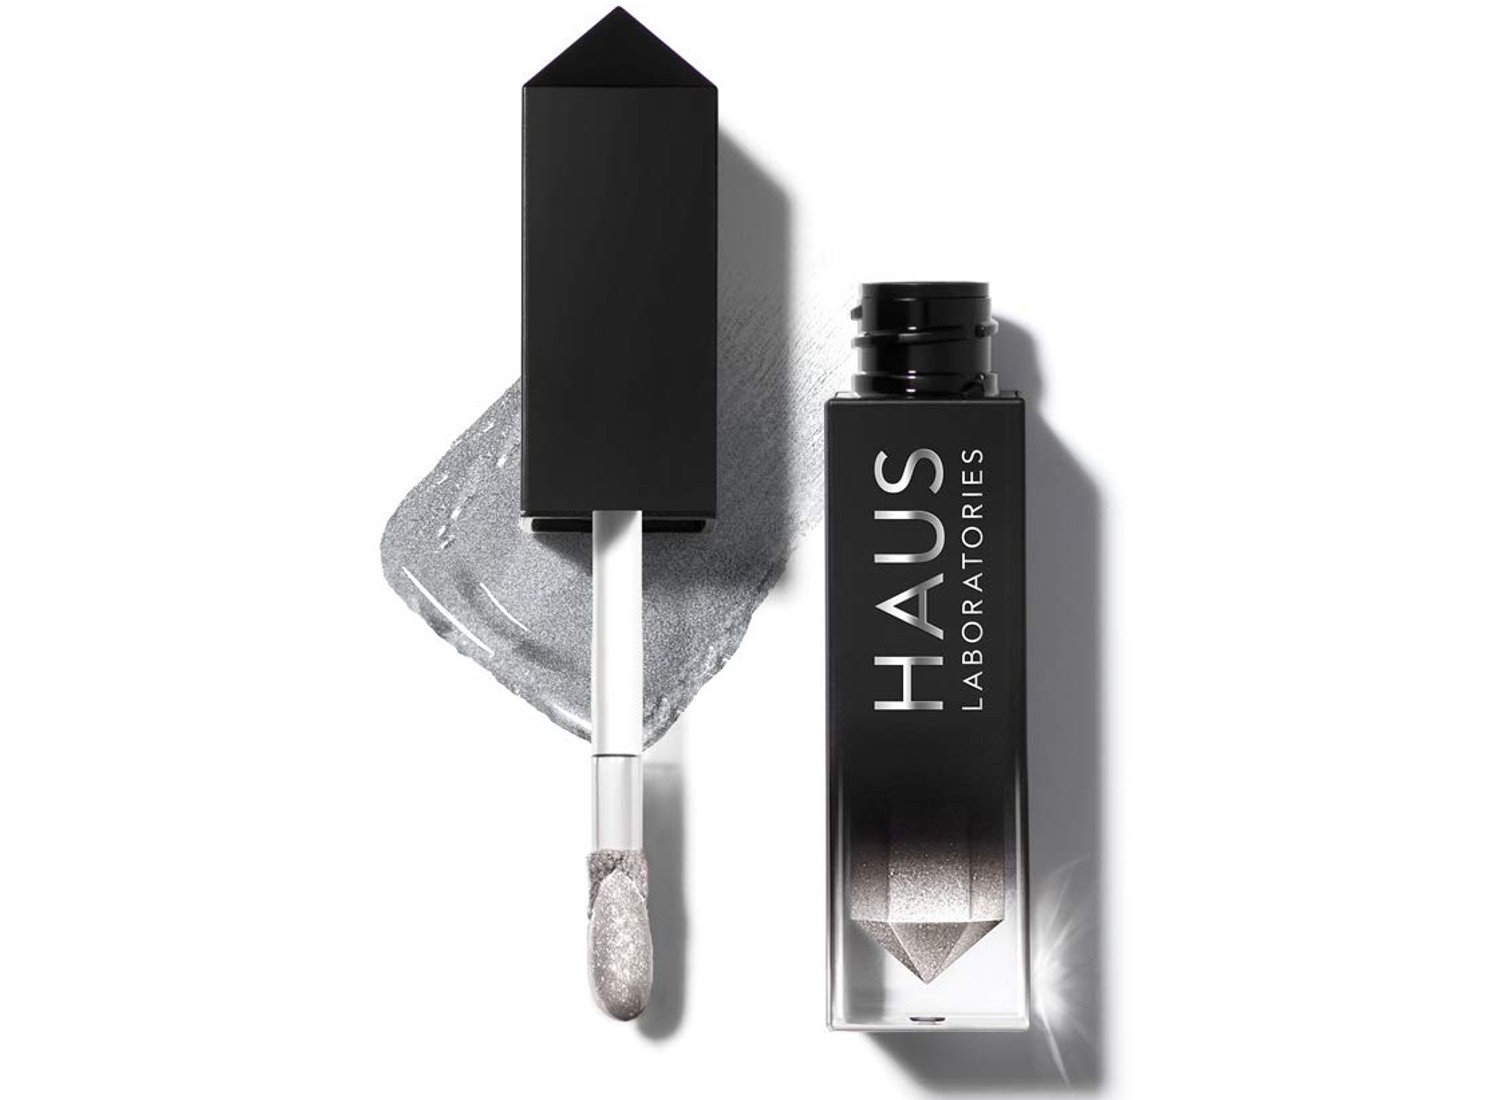 Haus Laboratories’ highly pigmented liquid eyeshadow